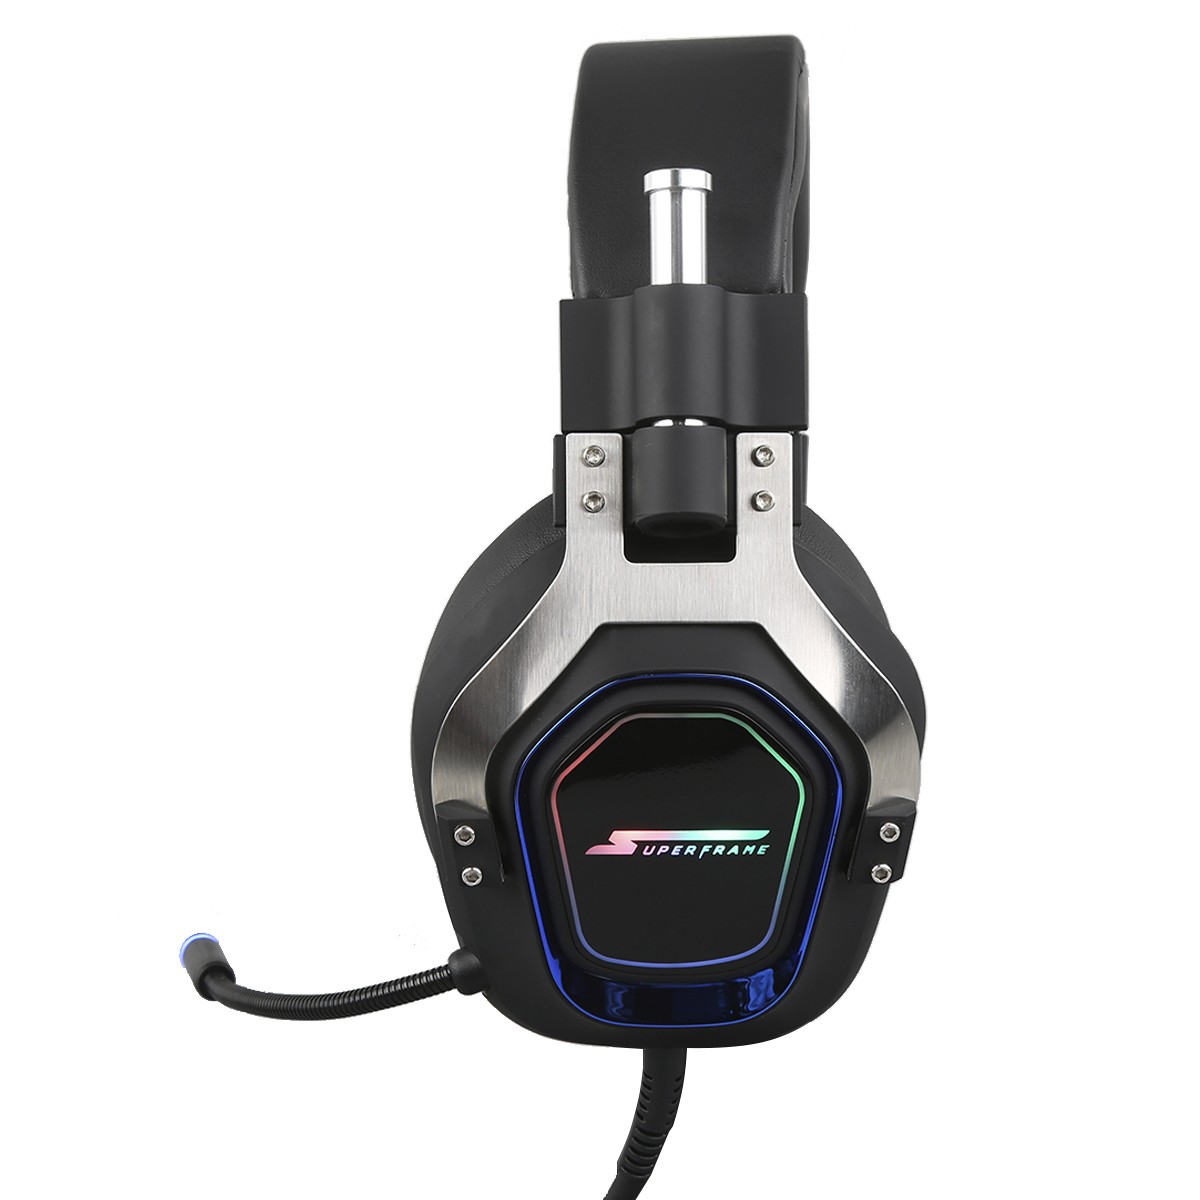 Headset Gamer SuperFrame PRAGMA, Drivers de 50mm, 7.1 Surround, RGB, USB, Black